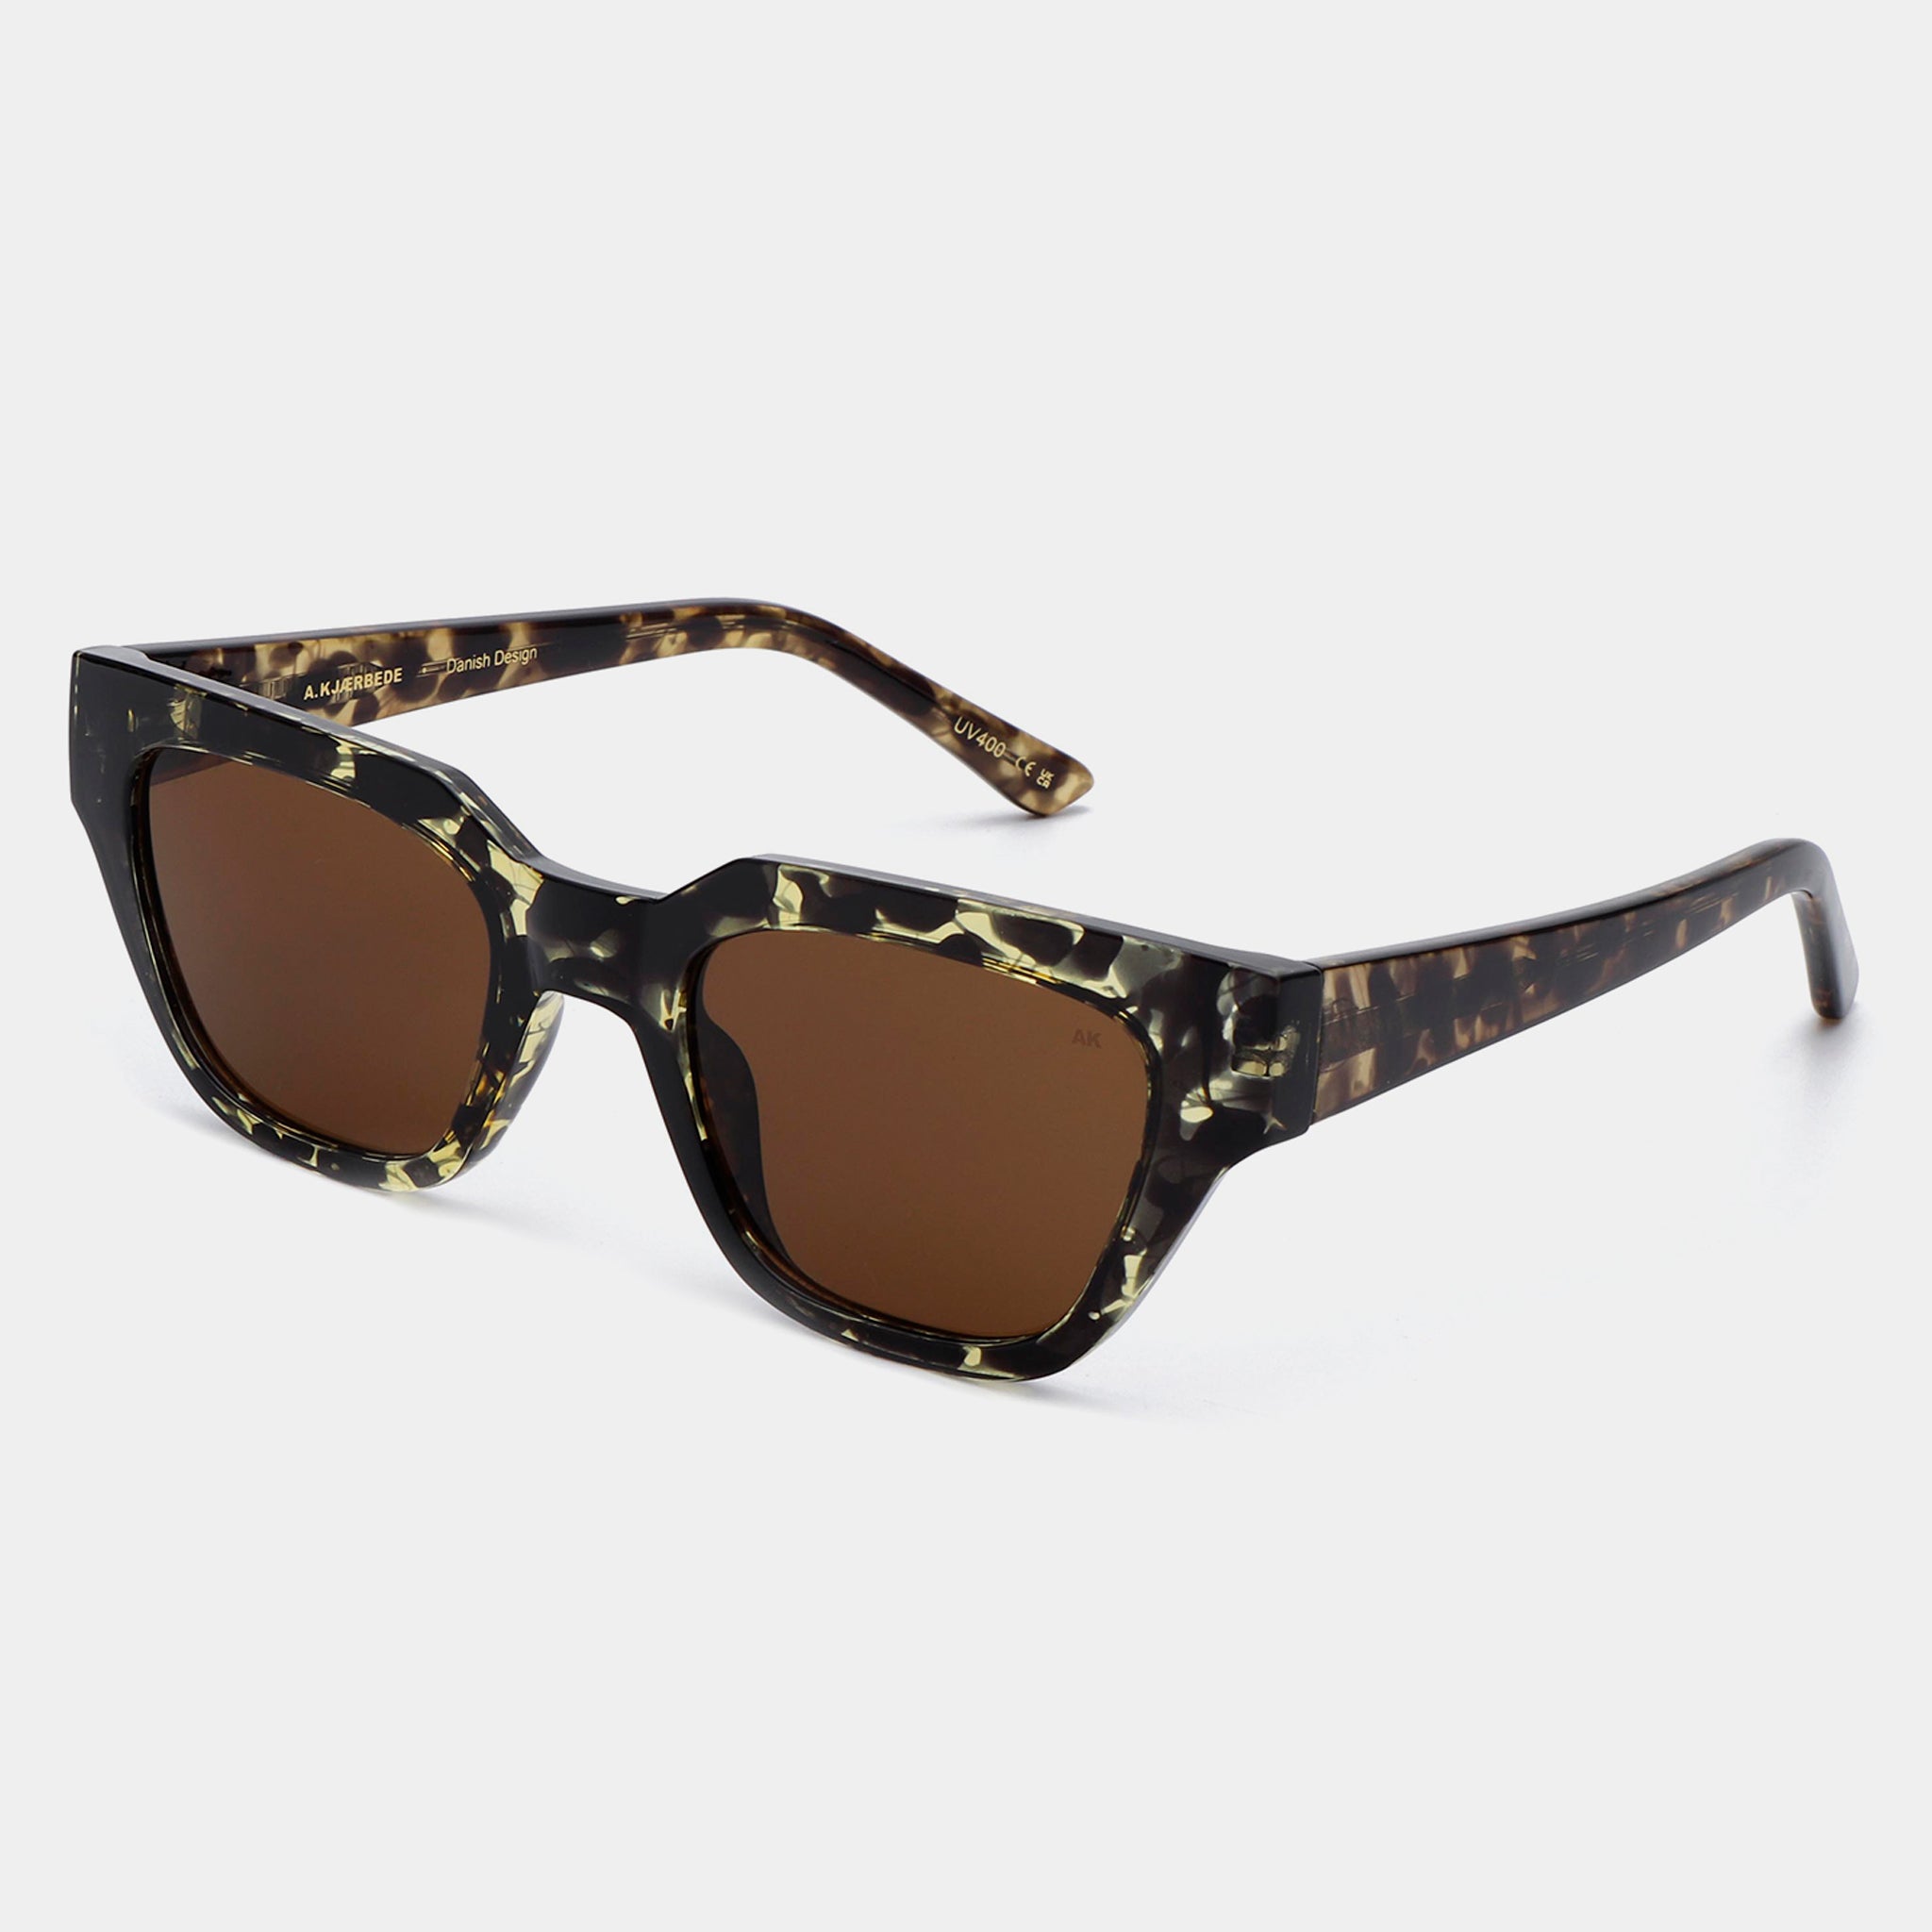 A.Kjaerbede Sunglasses - Kaws - Black / Yellow Tortoise